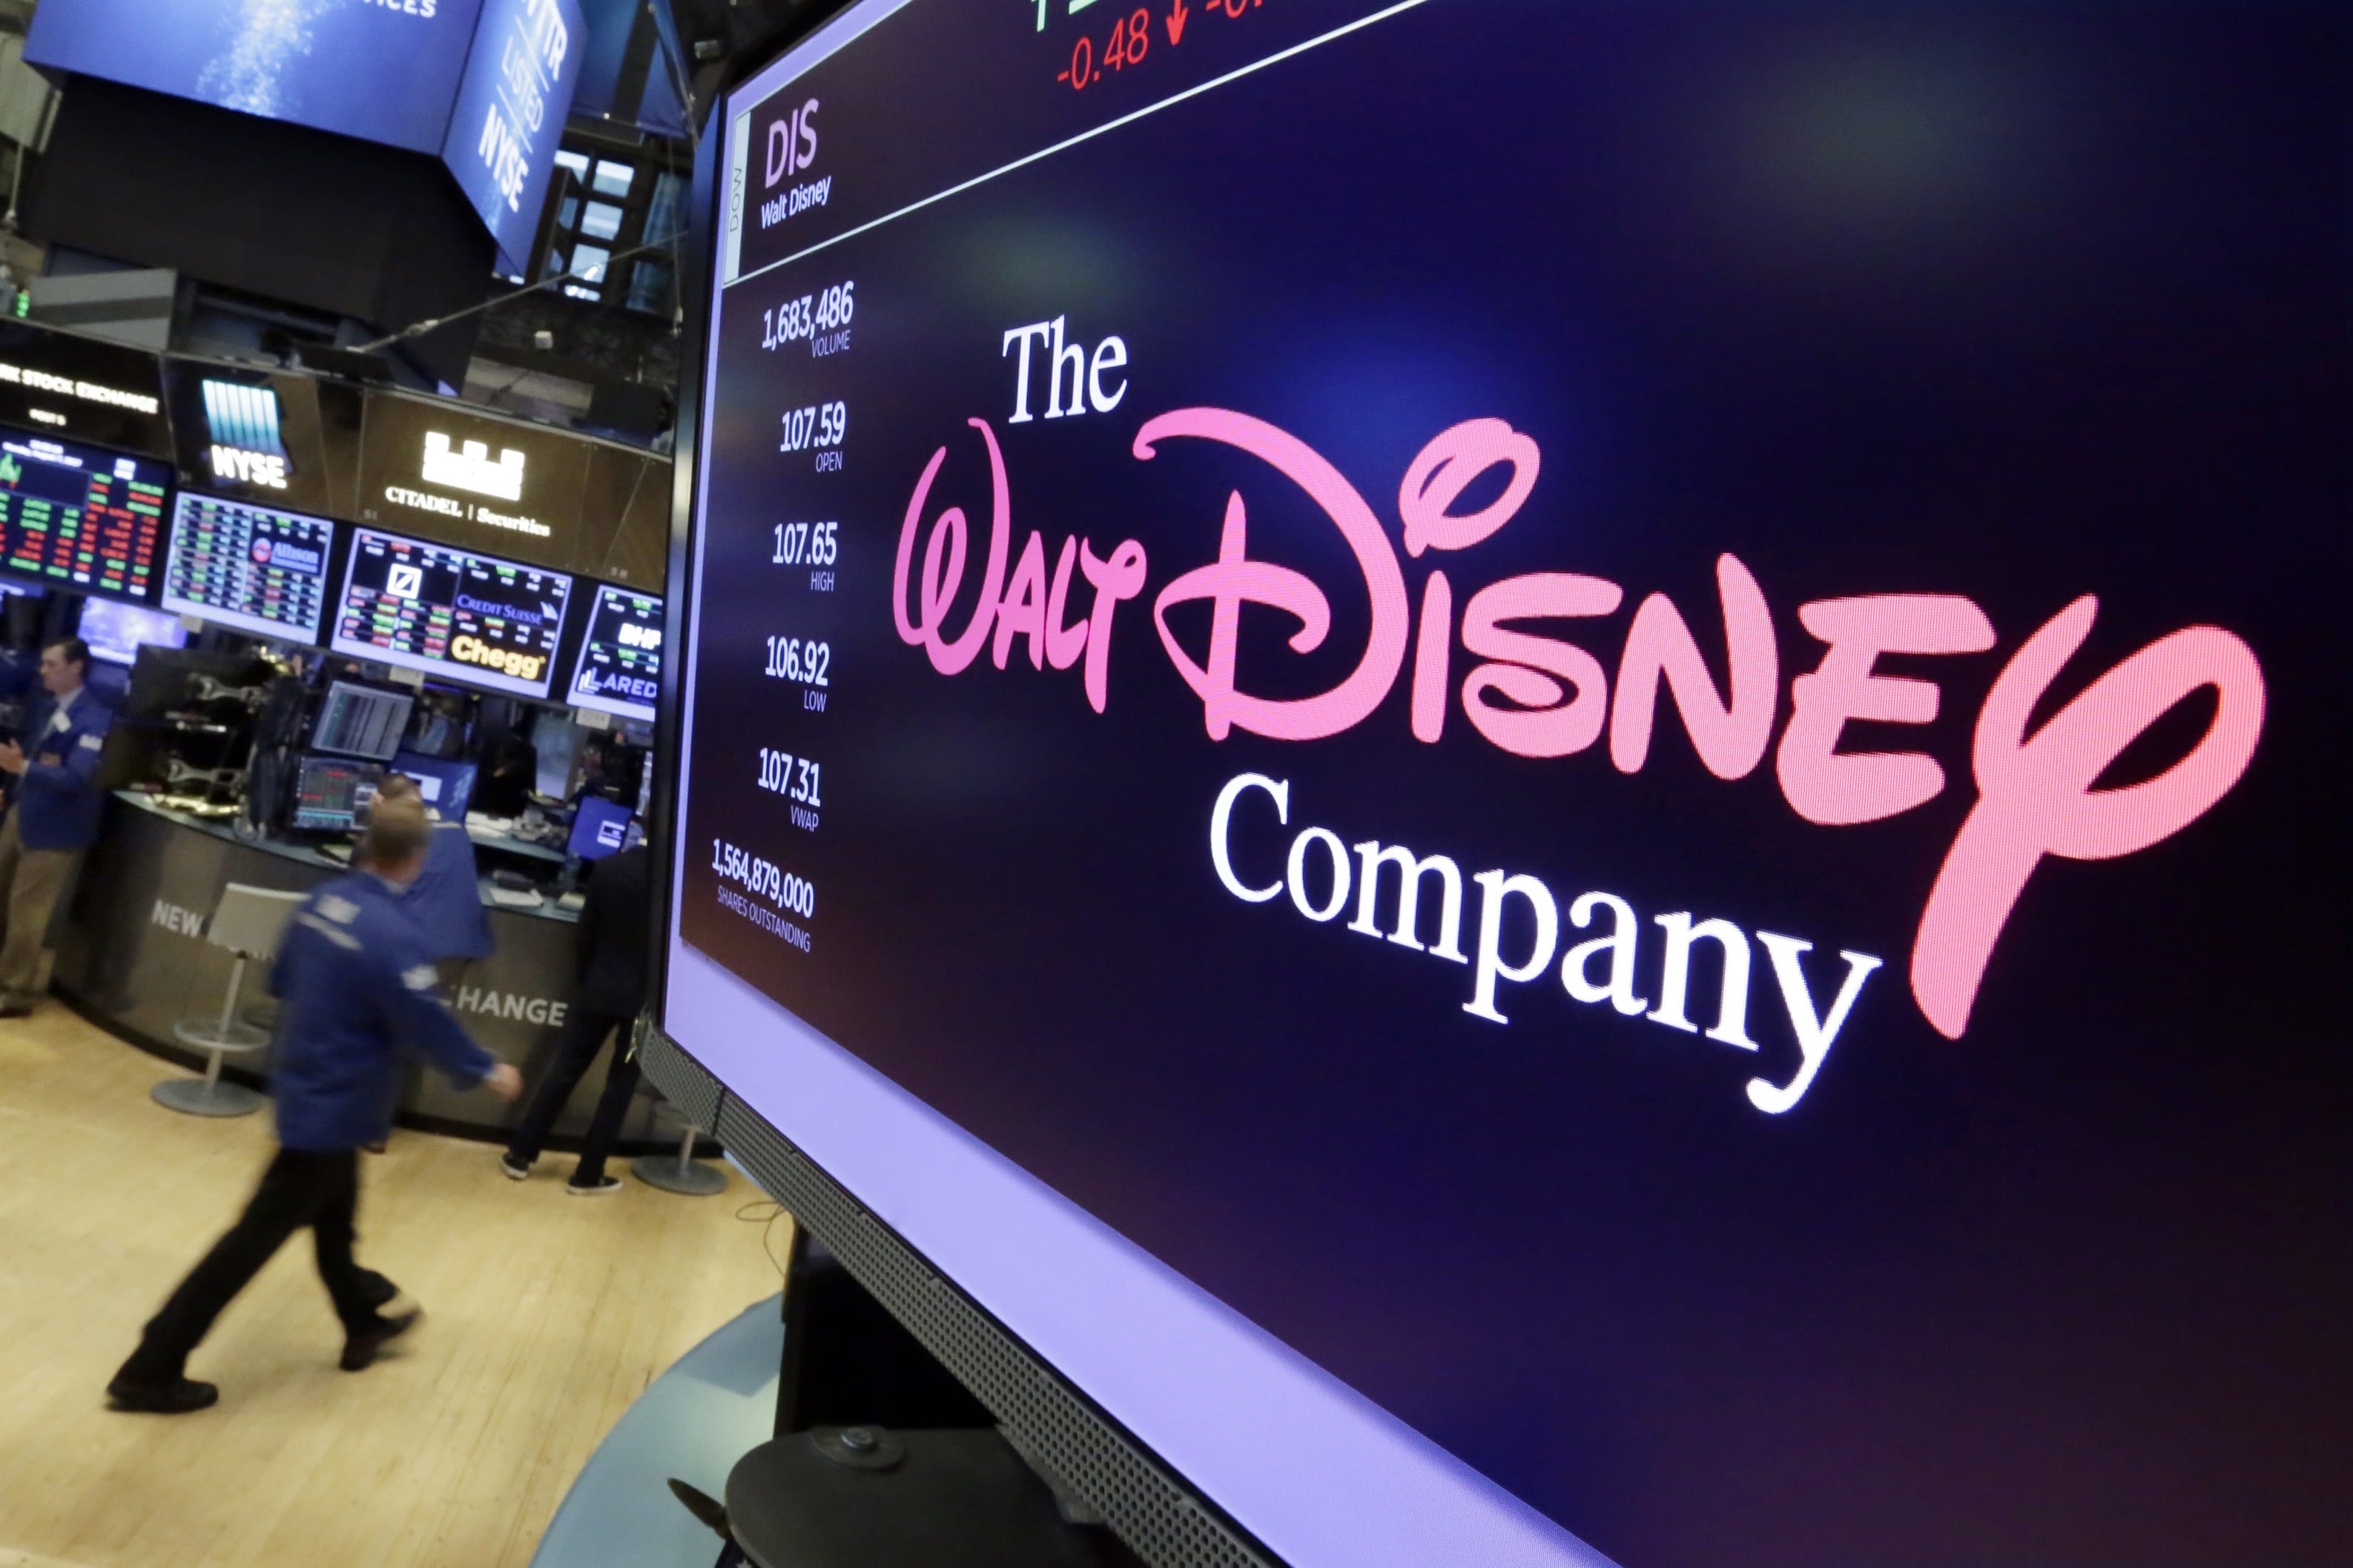 Pixar layoffs are underway. About 175 jobs are being cut